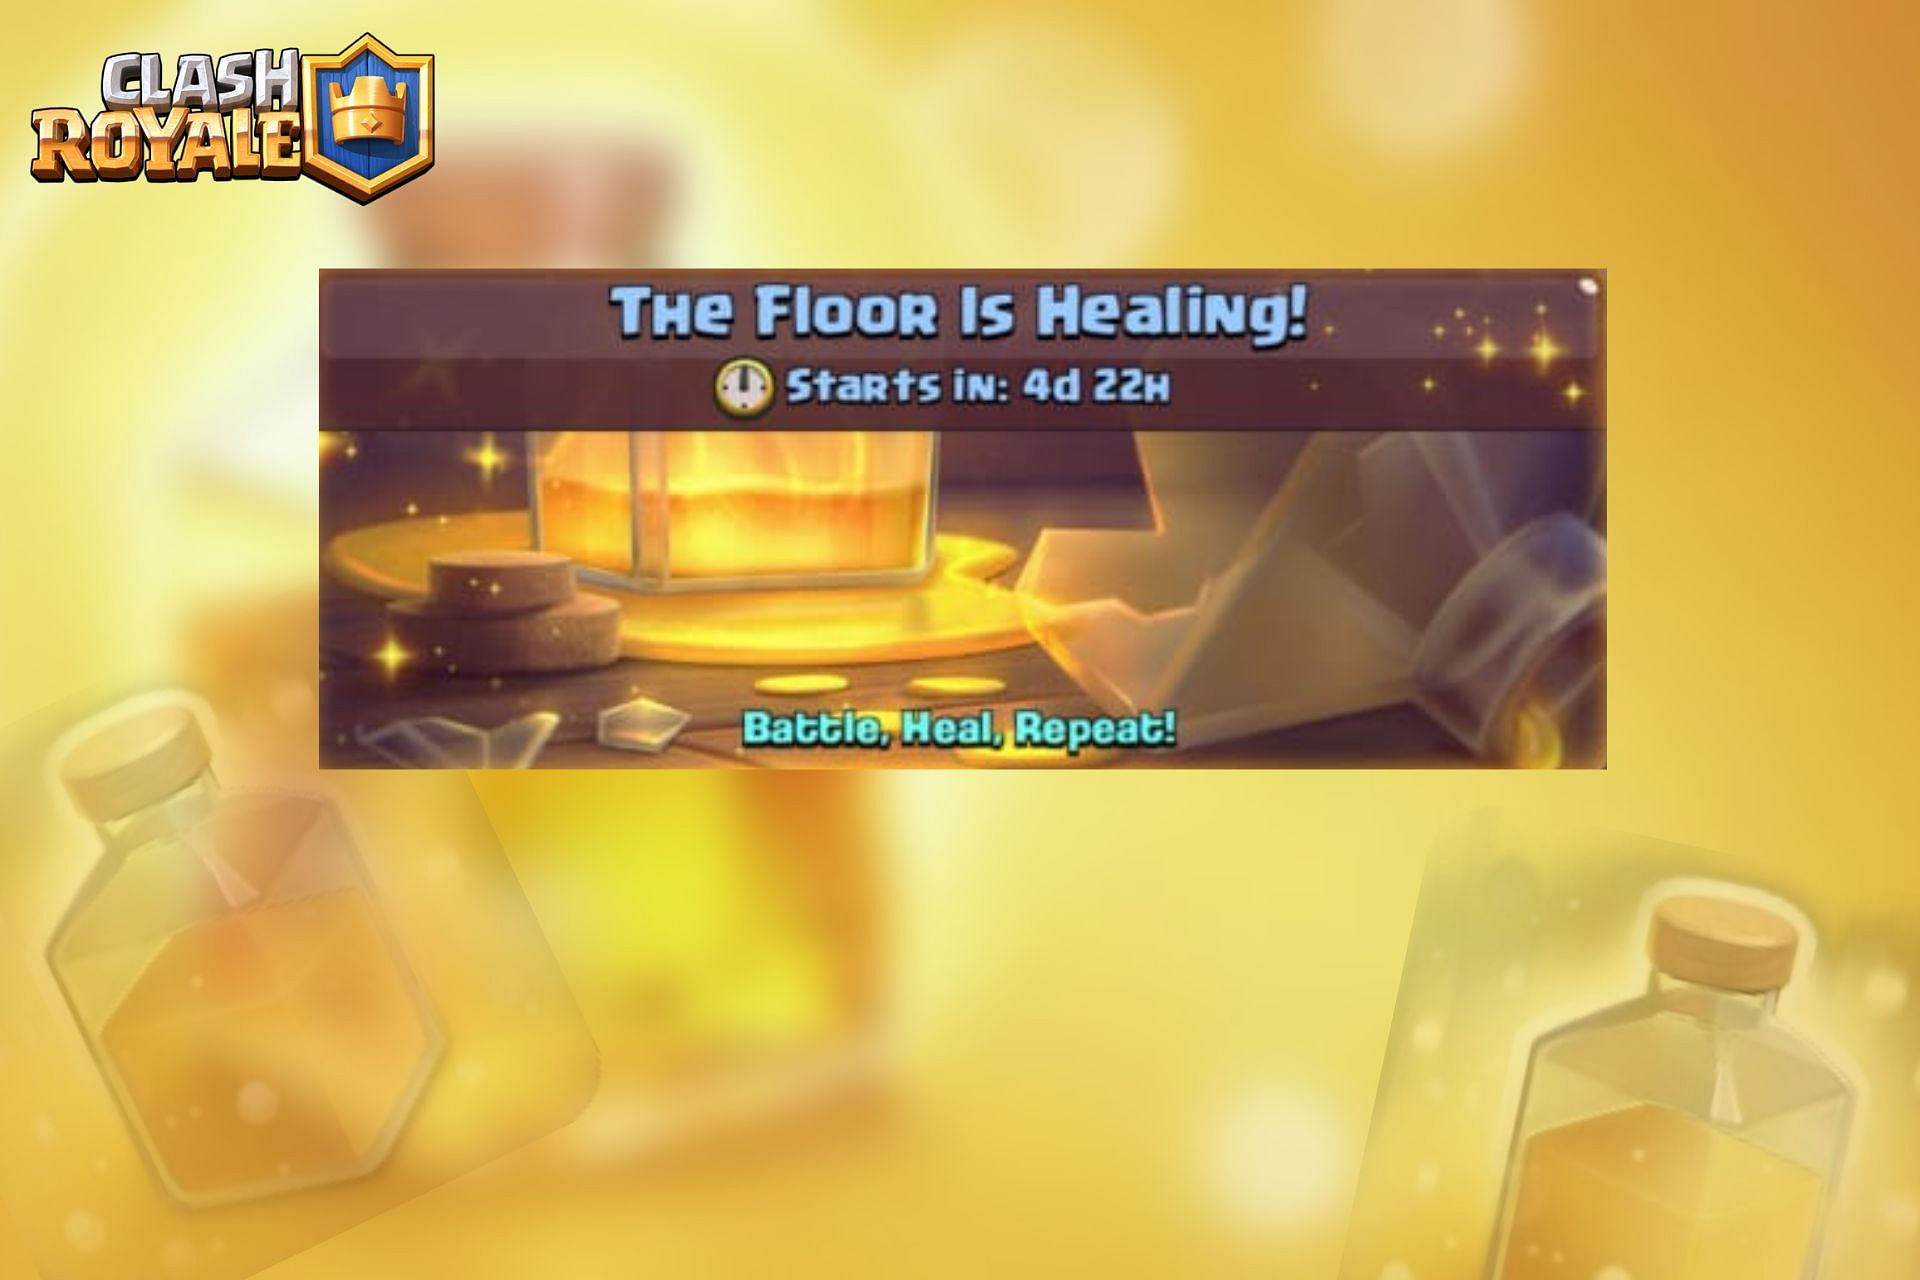 The Floor is Healing challenge in Clash Royale (Image via Sportskeeda)